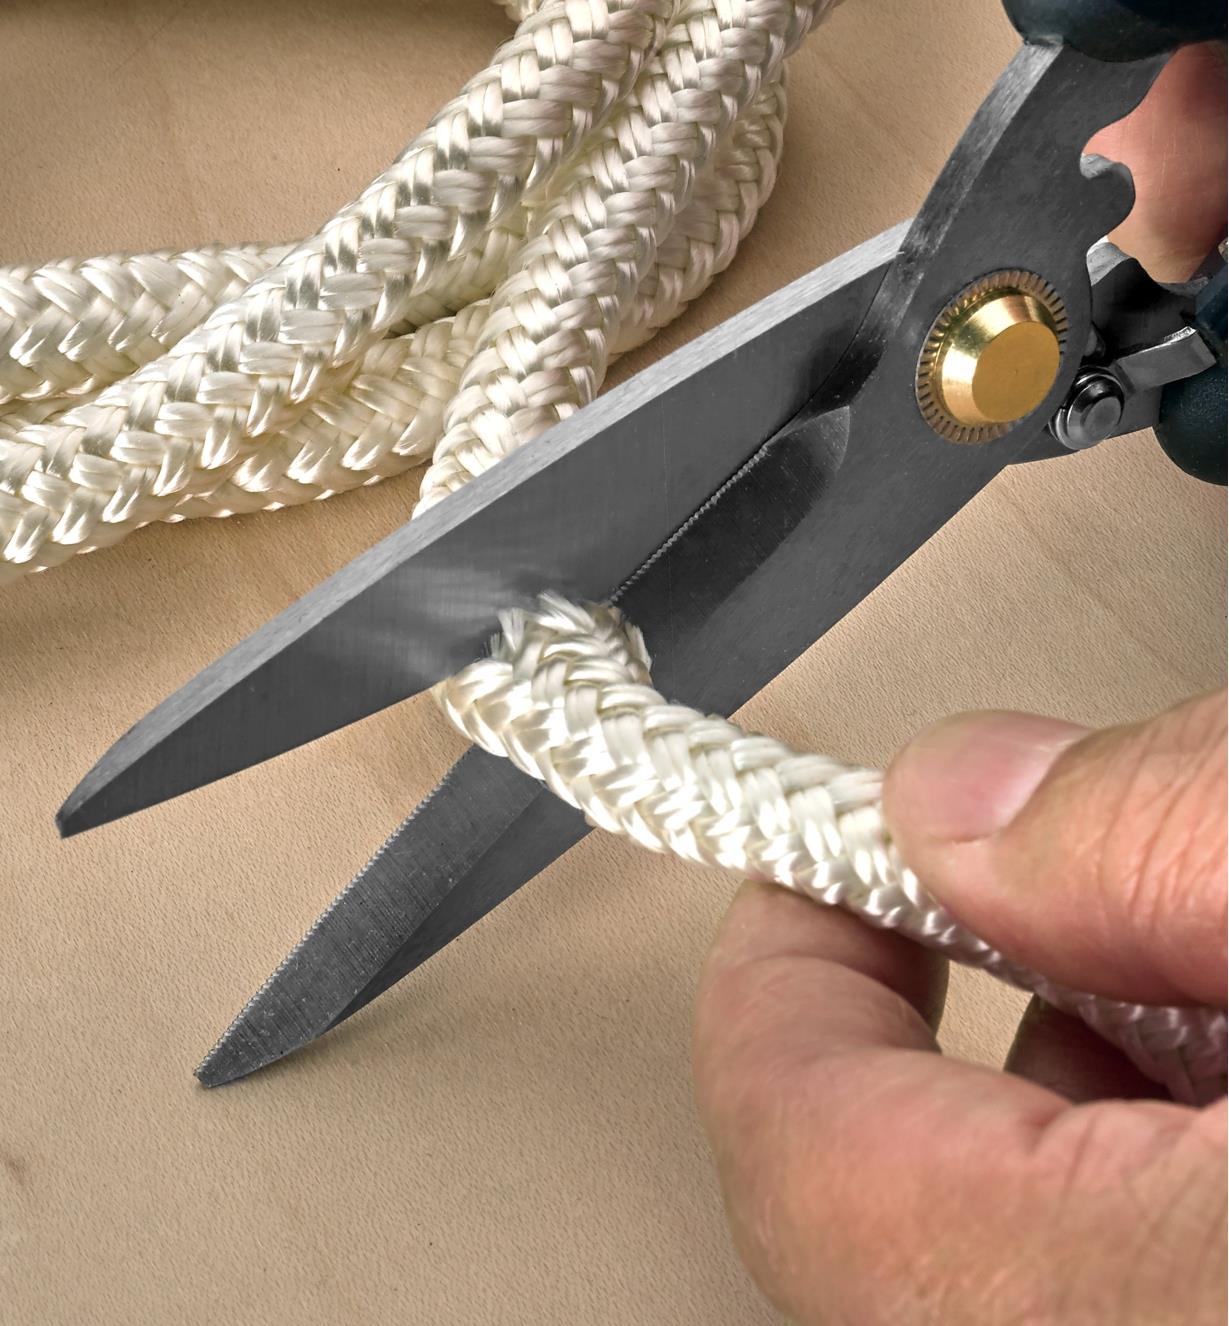 Using the shears to cut braided nylon rope